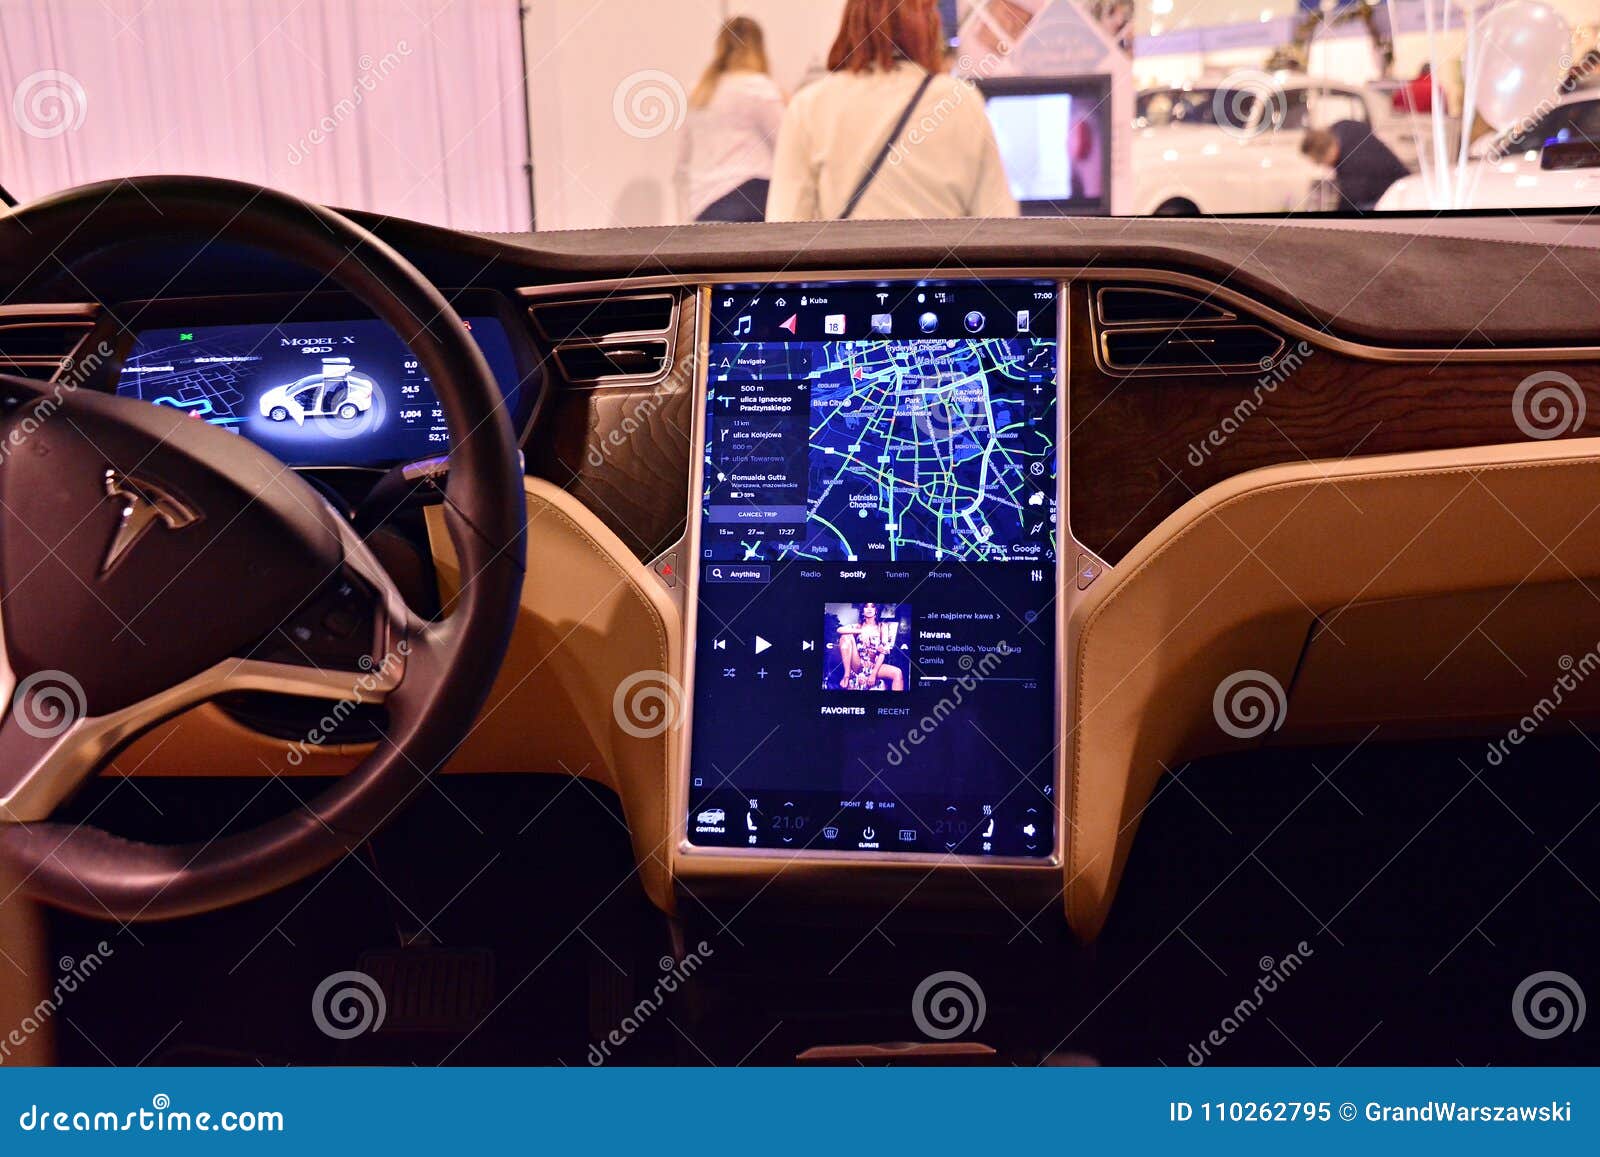 Interior Of Tesla Model X 90d Car Editorial Image Image